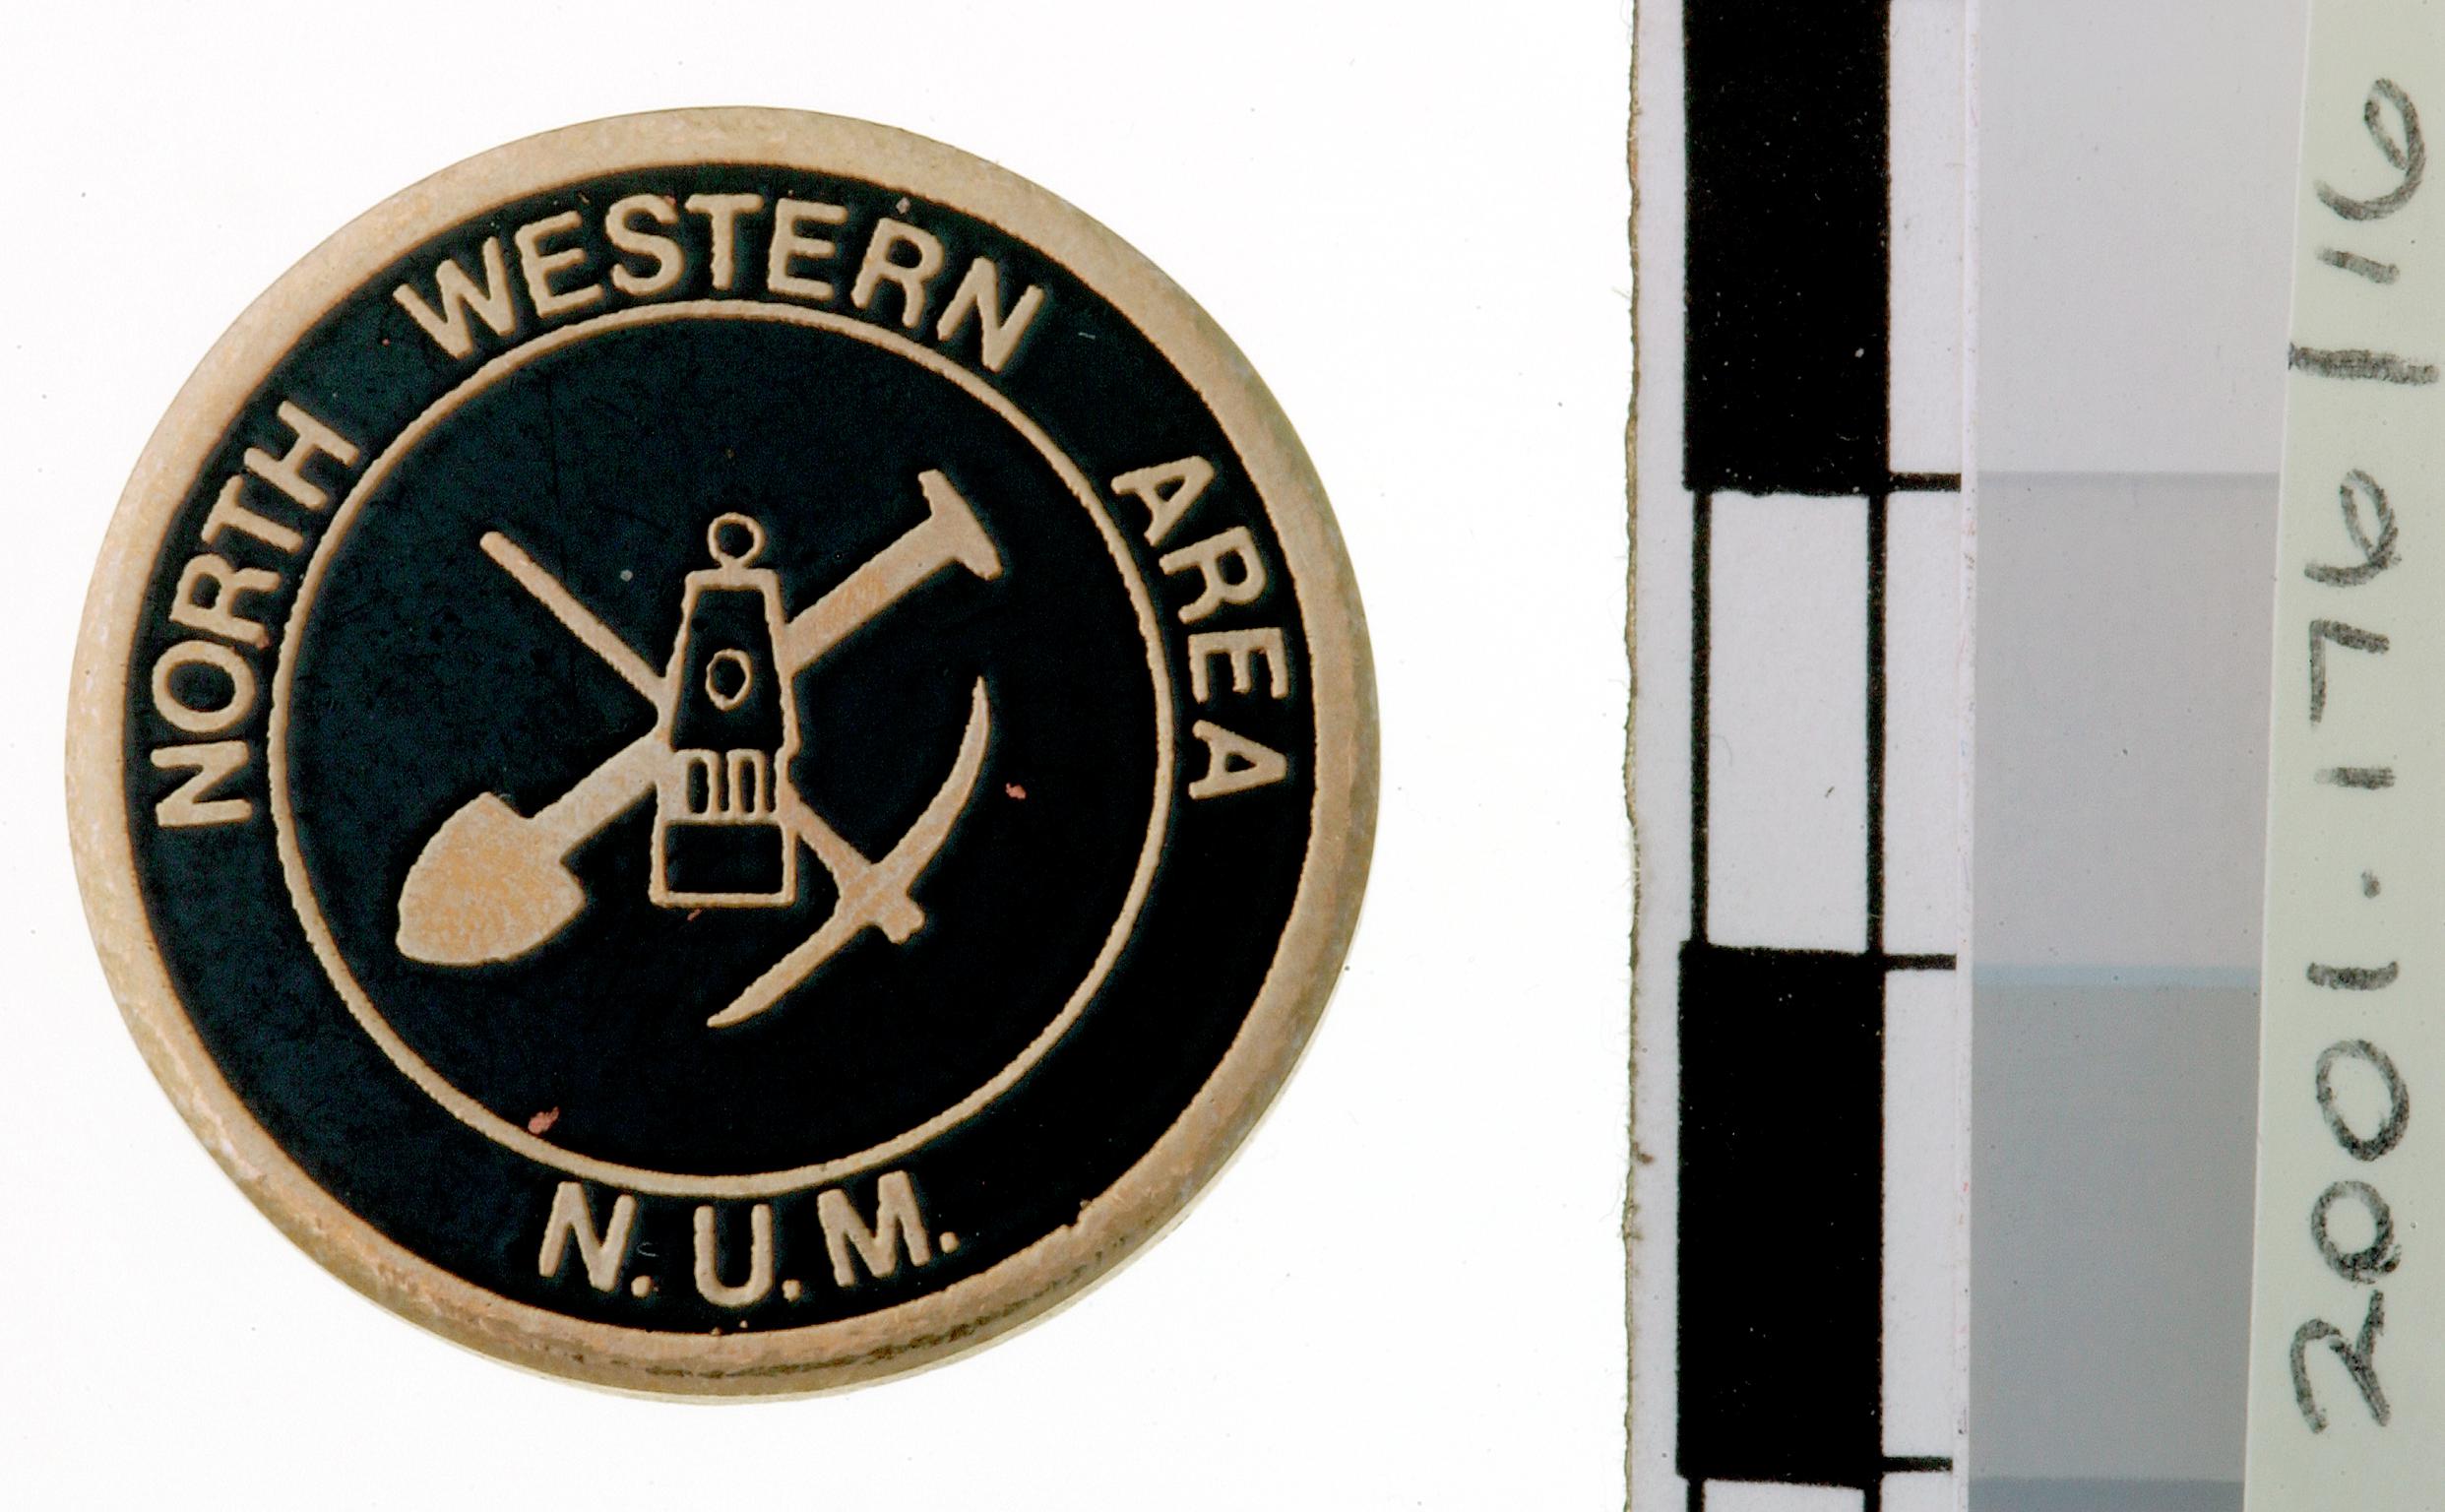 N.U.M. North Western Area, badge